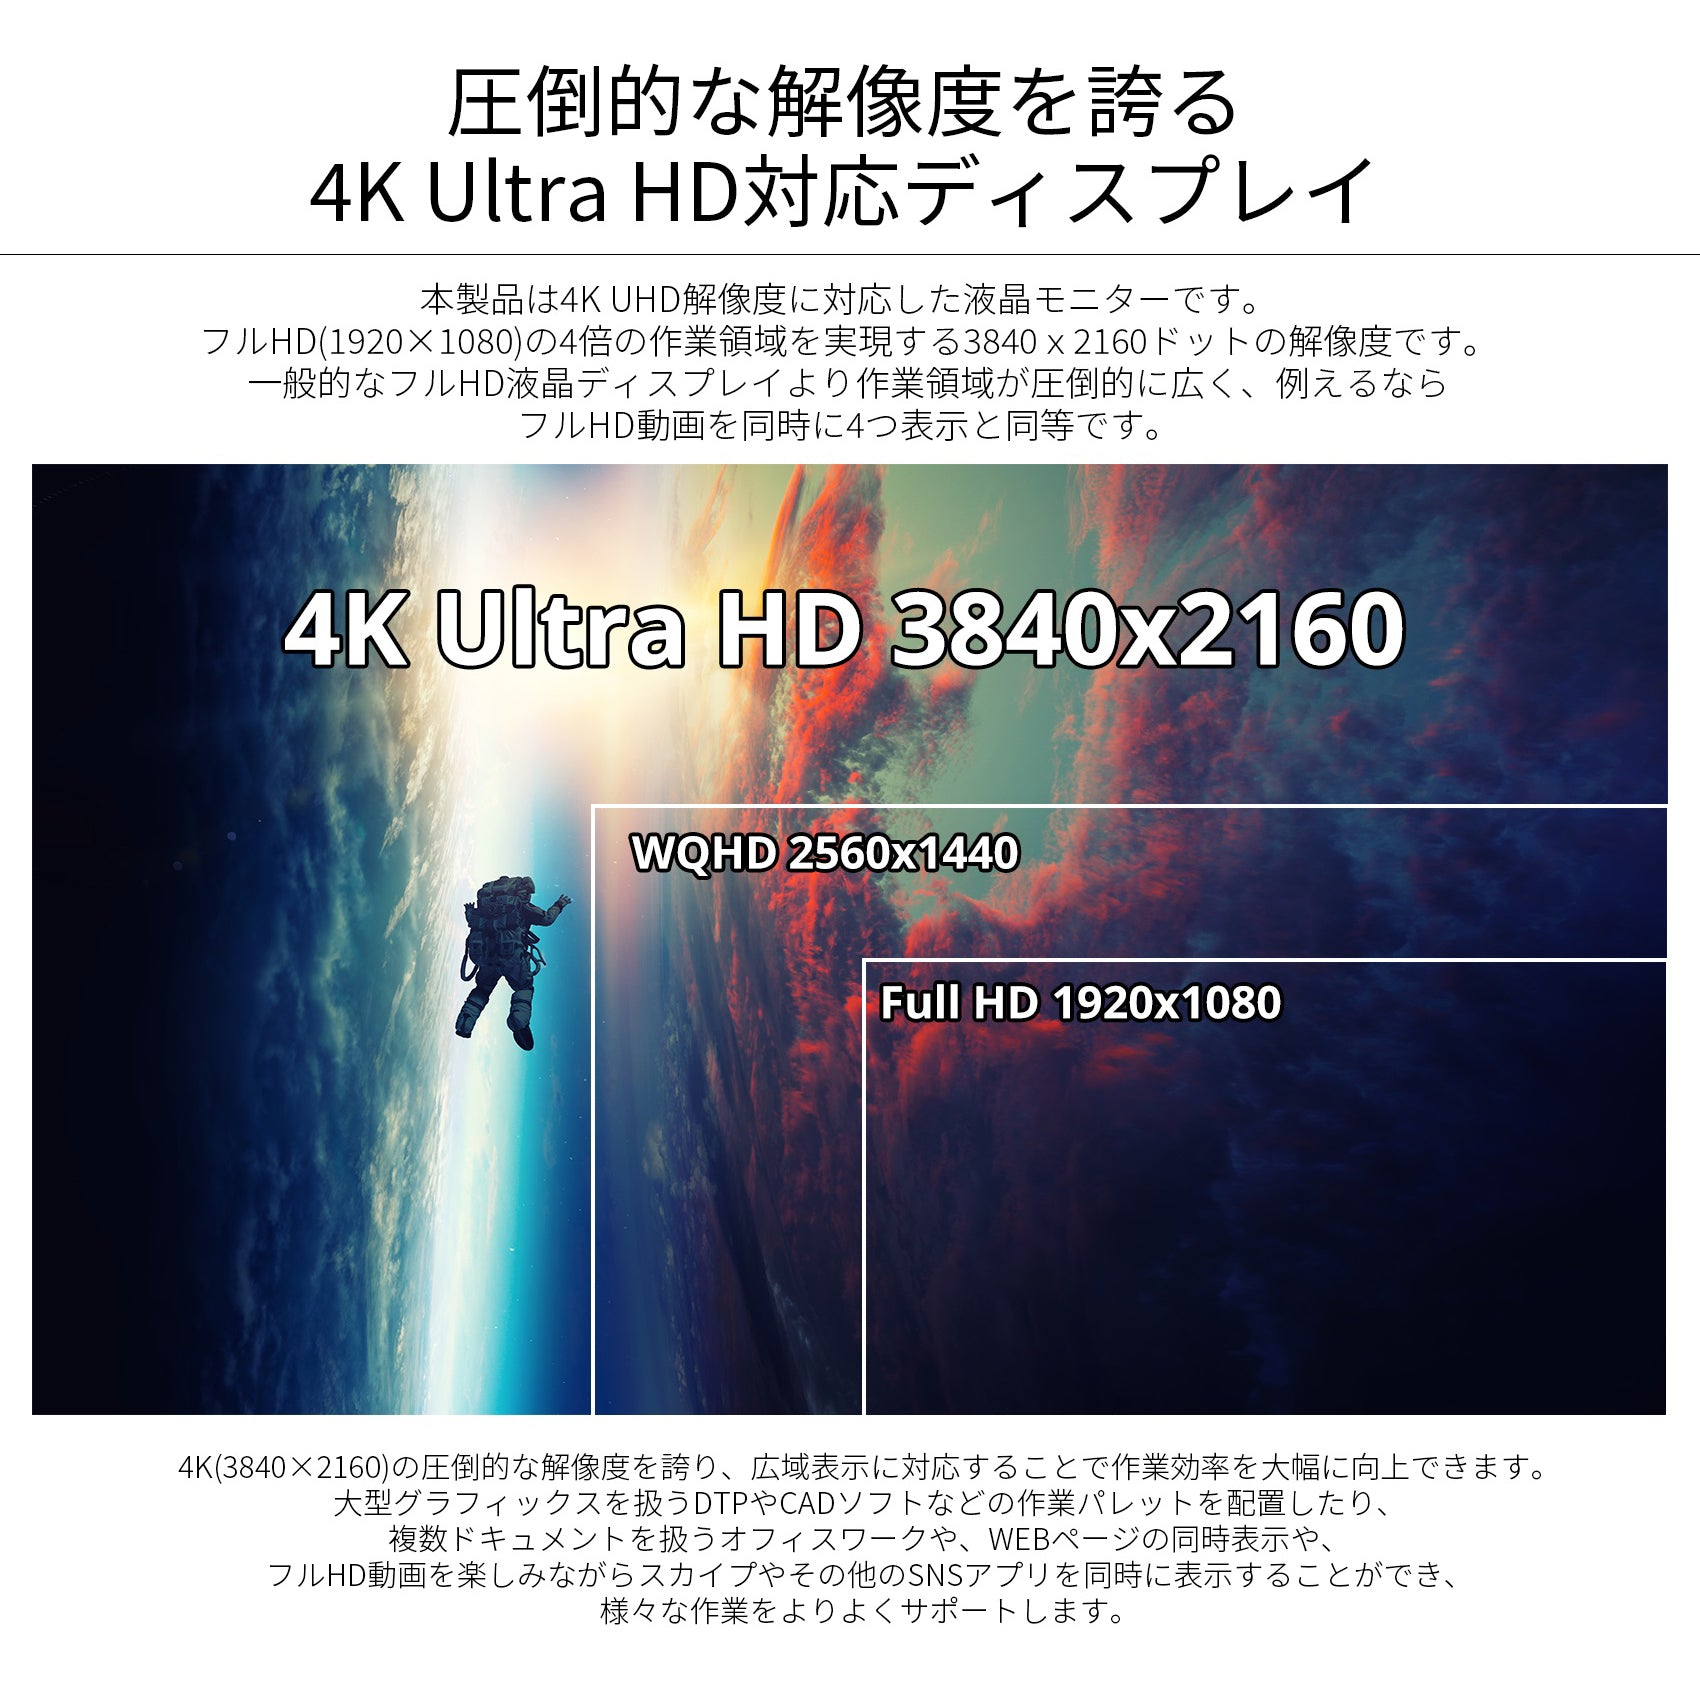 JAPANNEXT IPS液晶 4K(3840 x 2160)対応 27ｲﾝﾁ JN-V27UHD HDMI DP sRGB100%